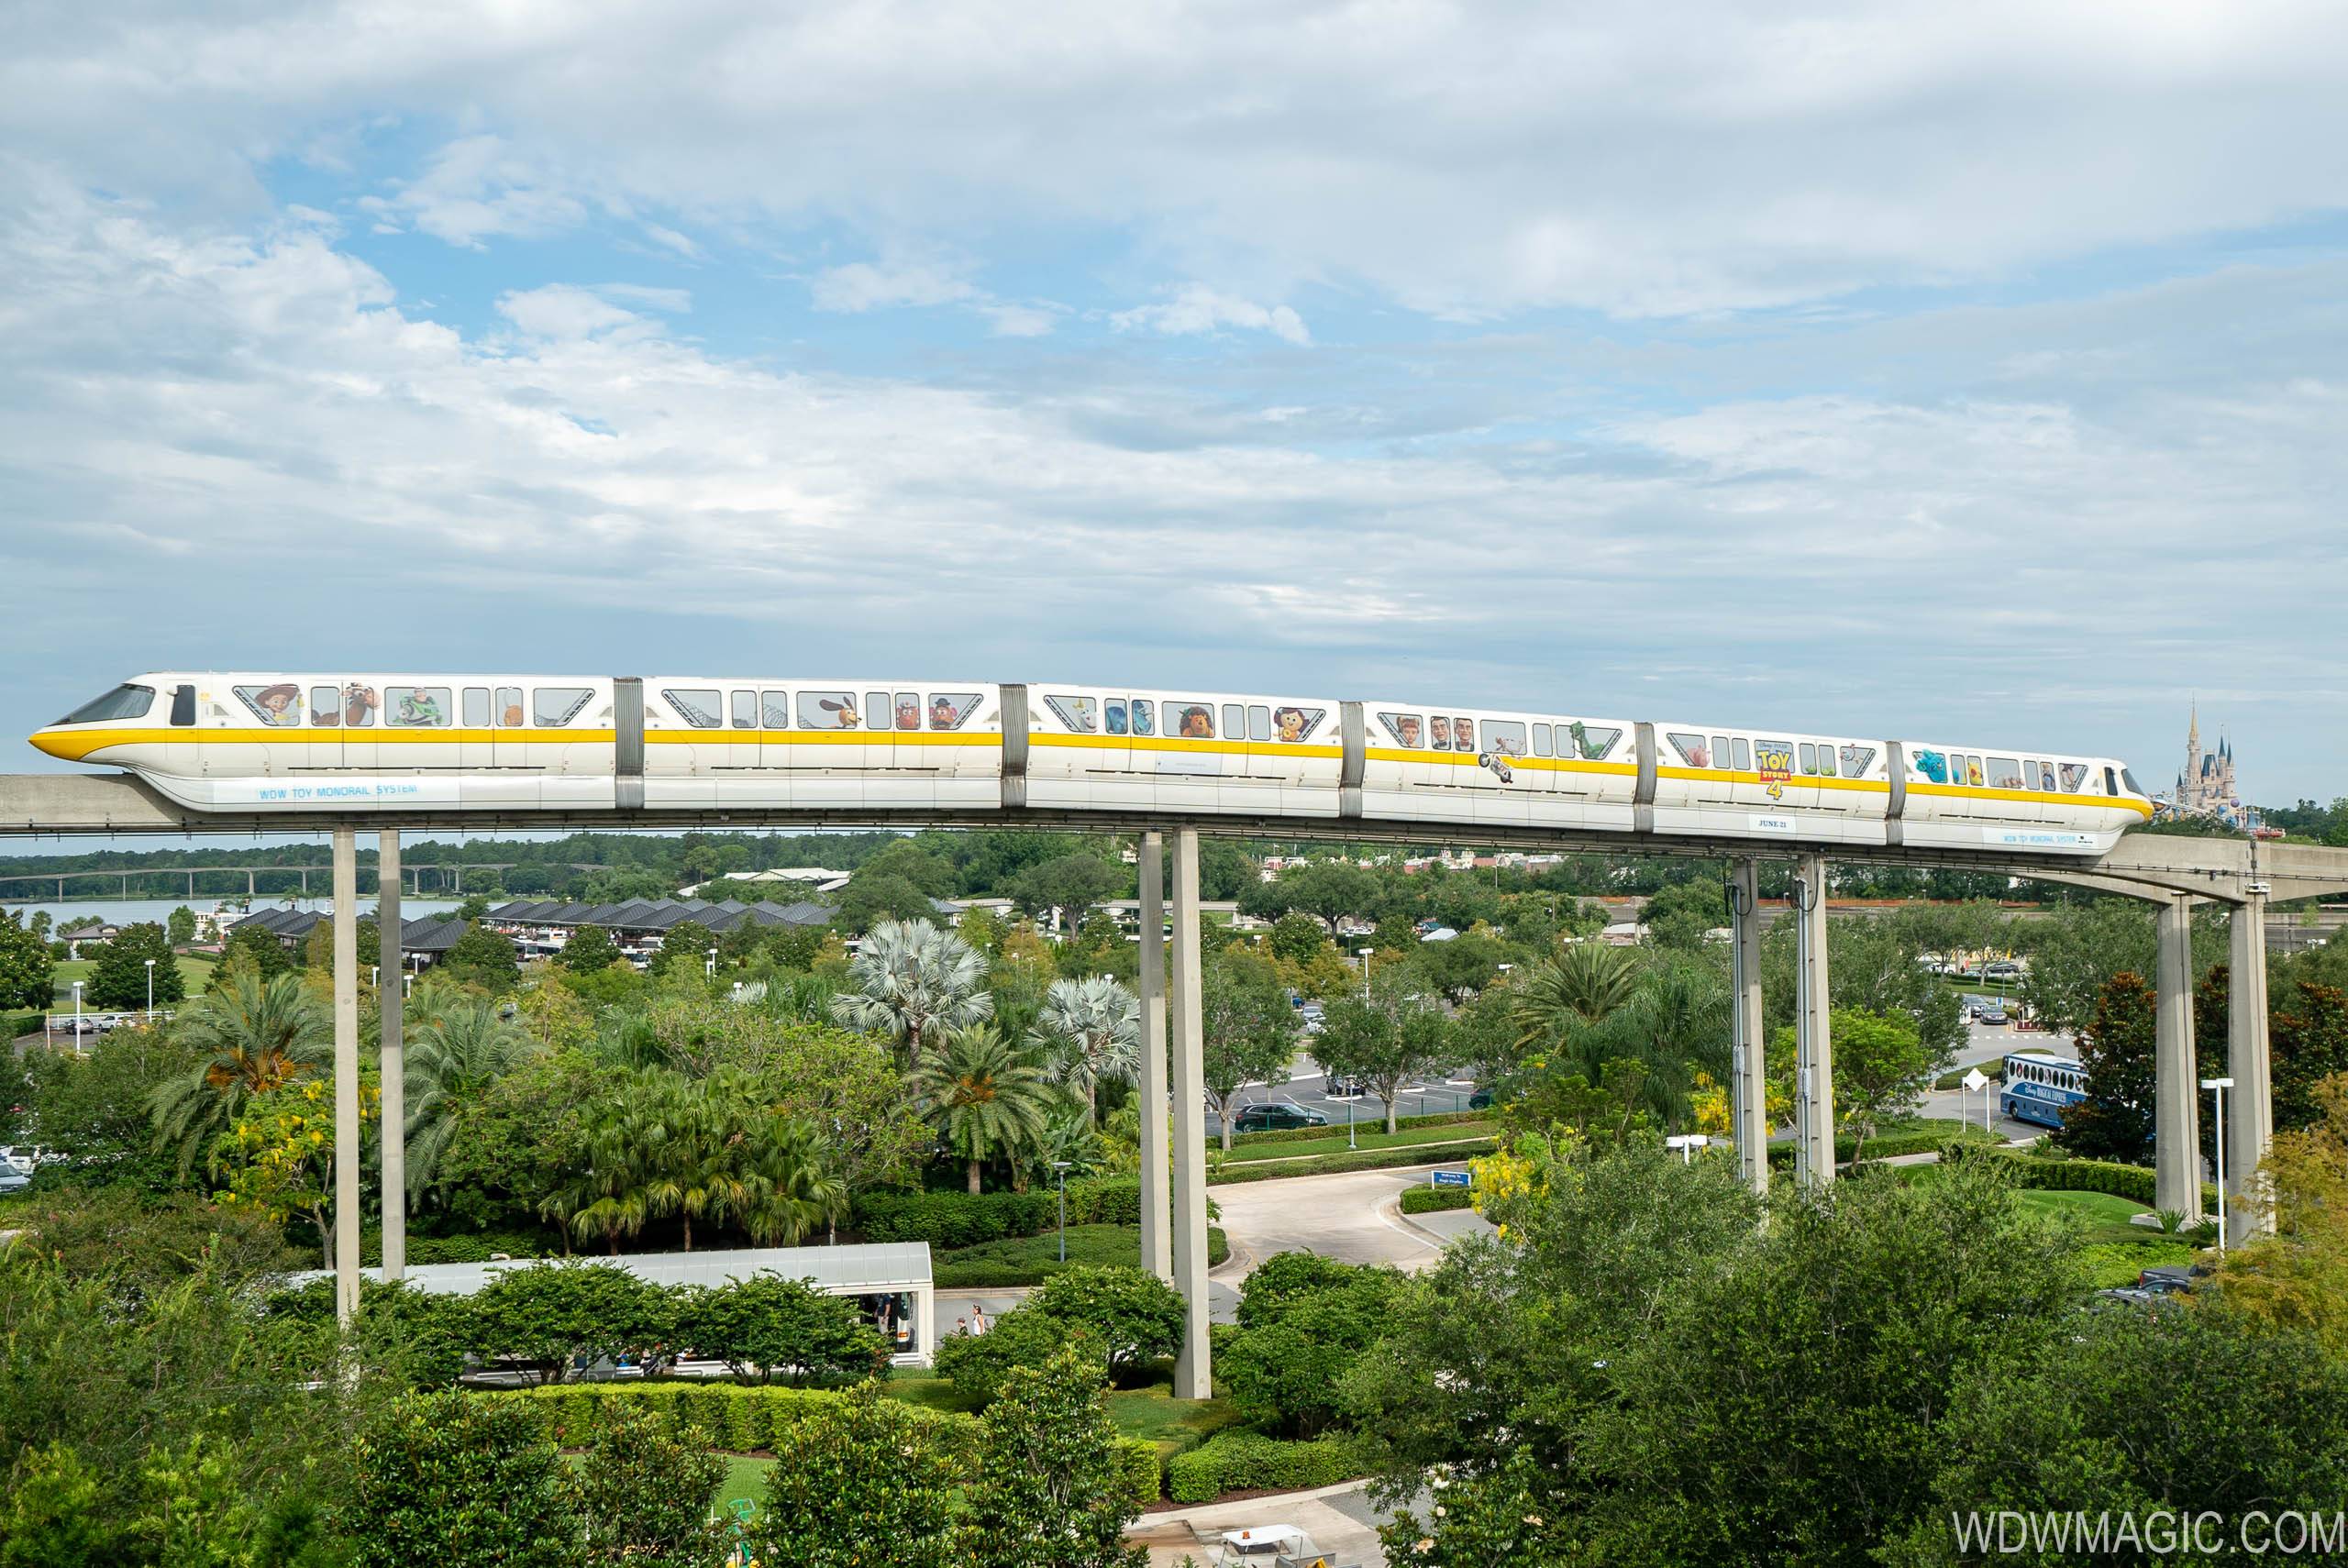 Walt Disney World monorail system&nbsp;